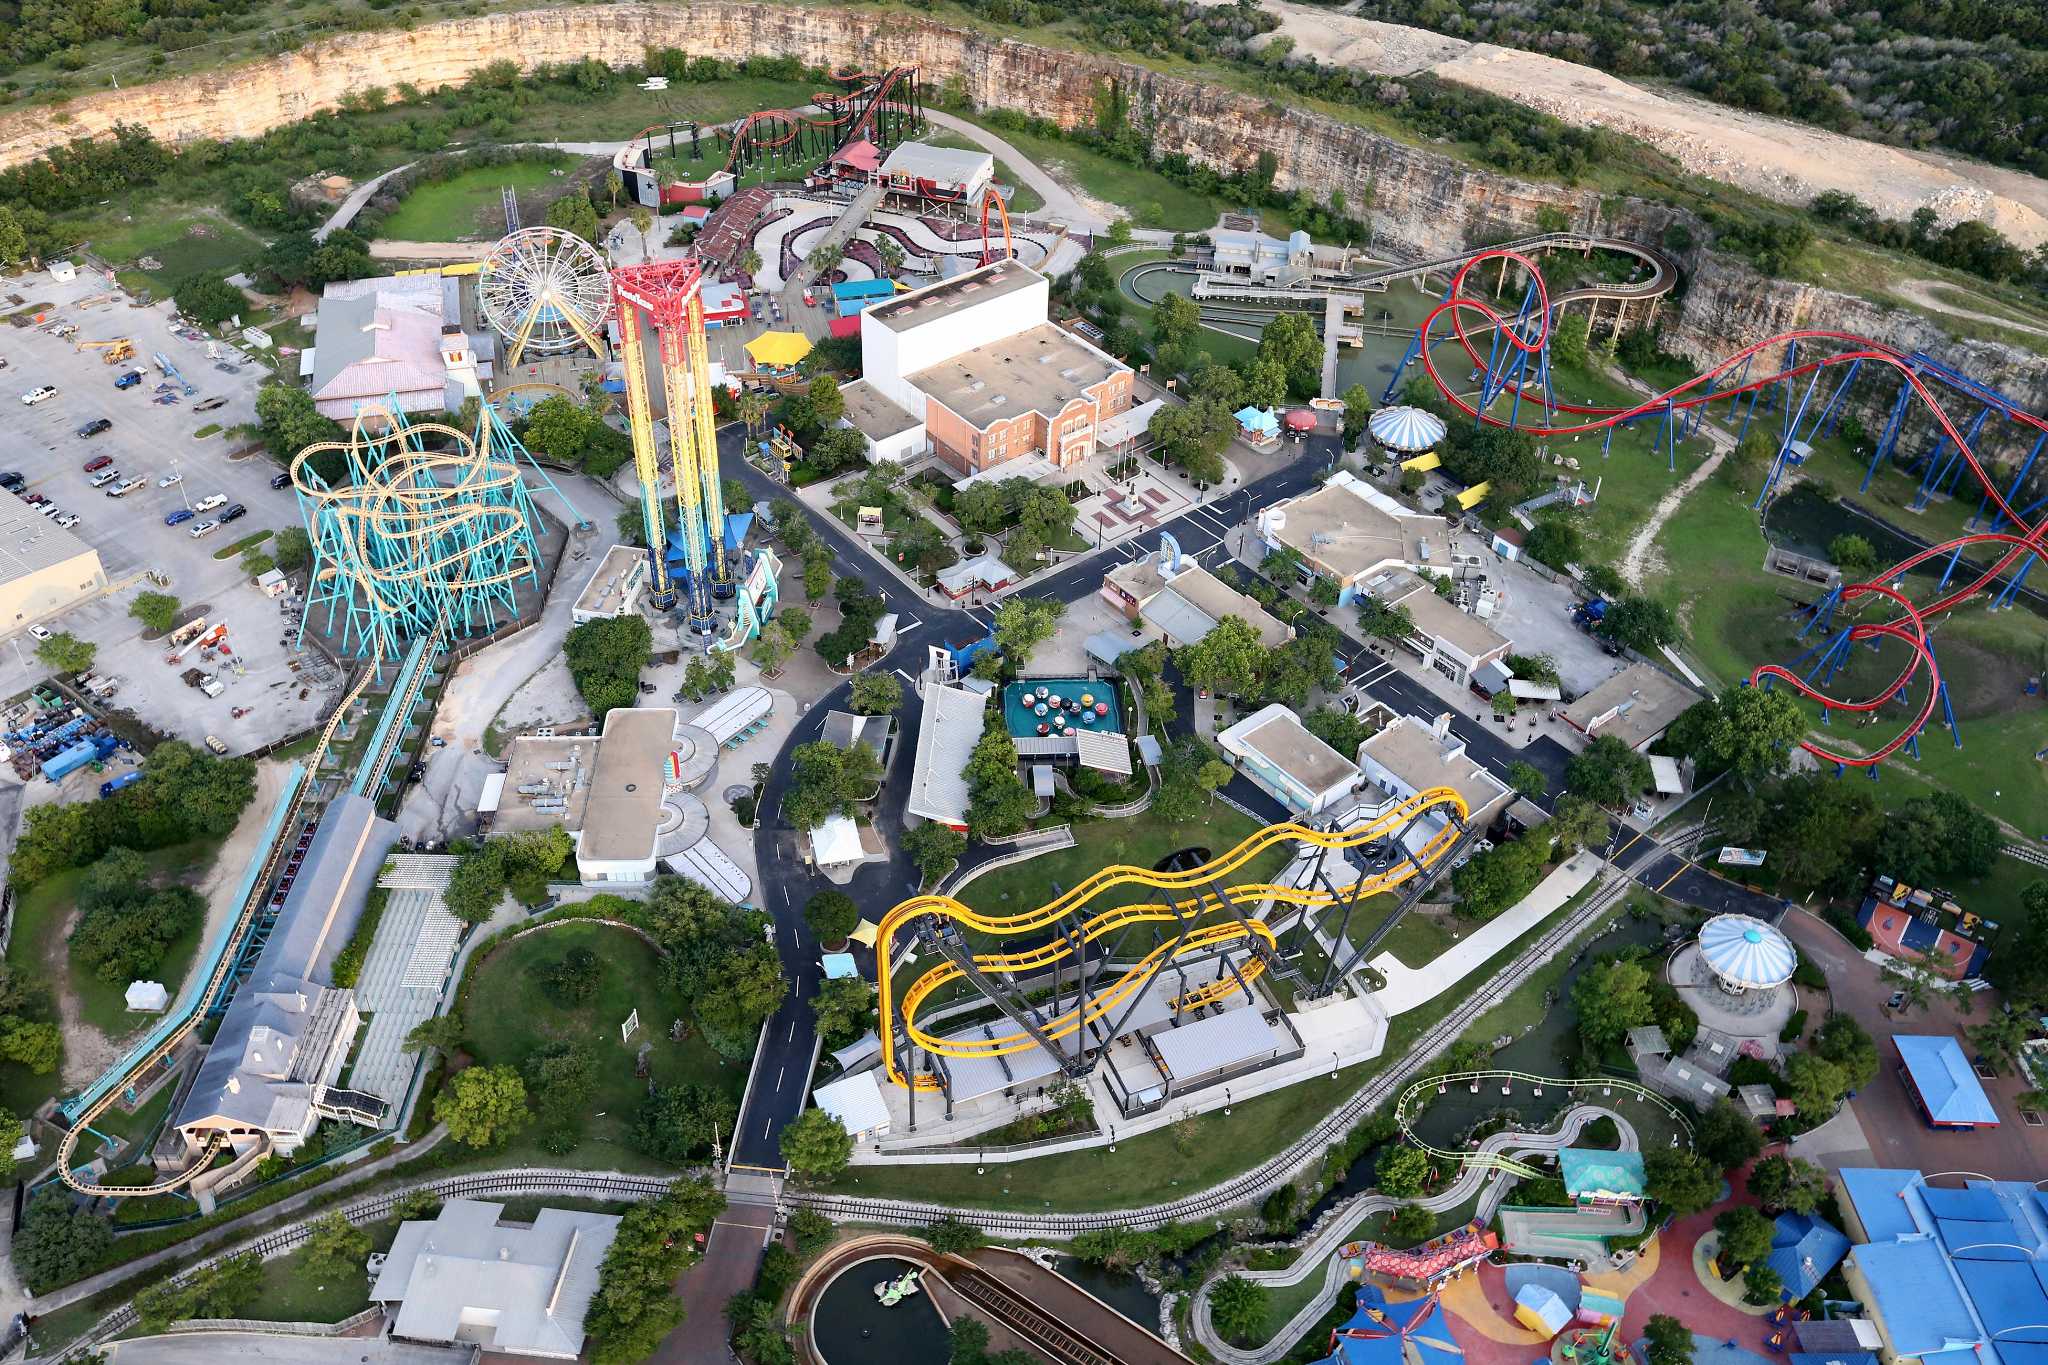 Six Flags Fiesta Texas kicks off 25th year this weekend - San Antonio Express-News